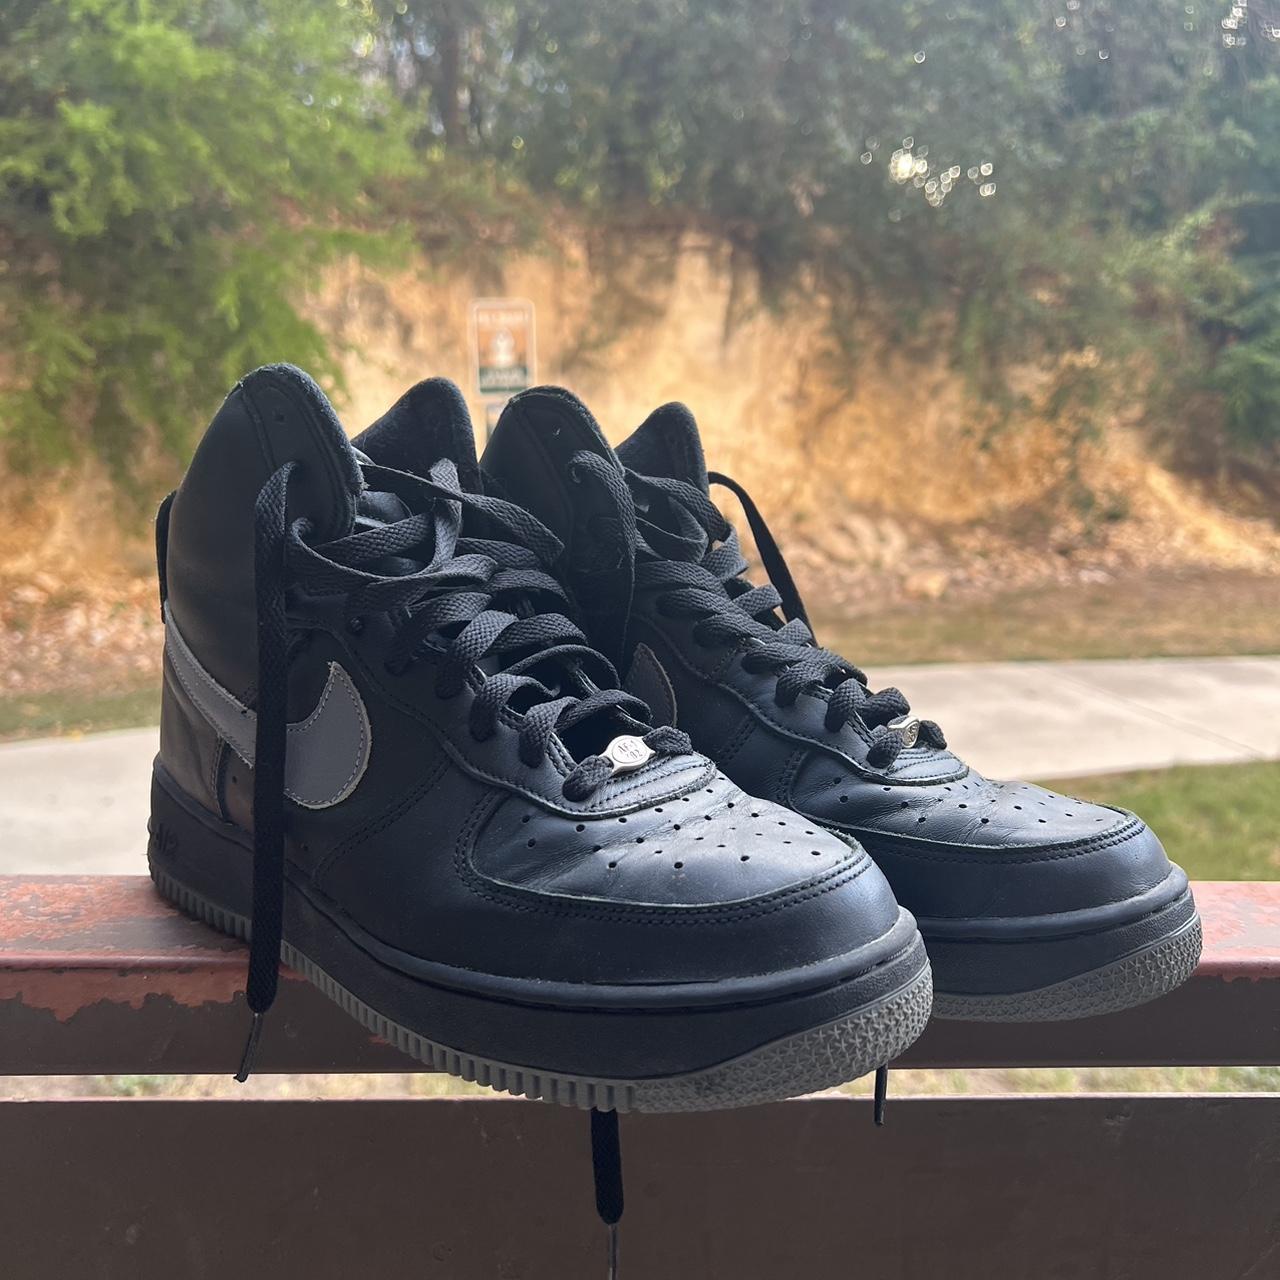 Nike Air Force 1 High trainers in triple black